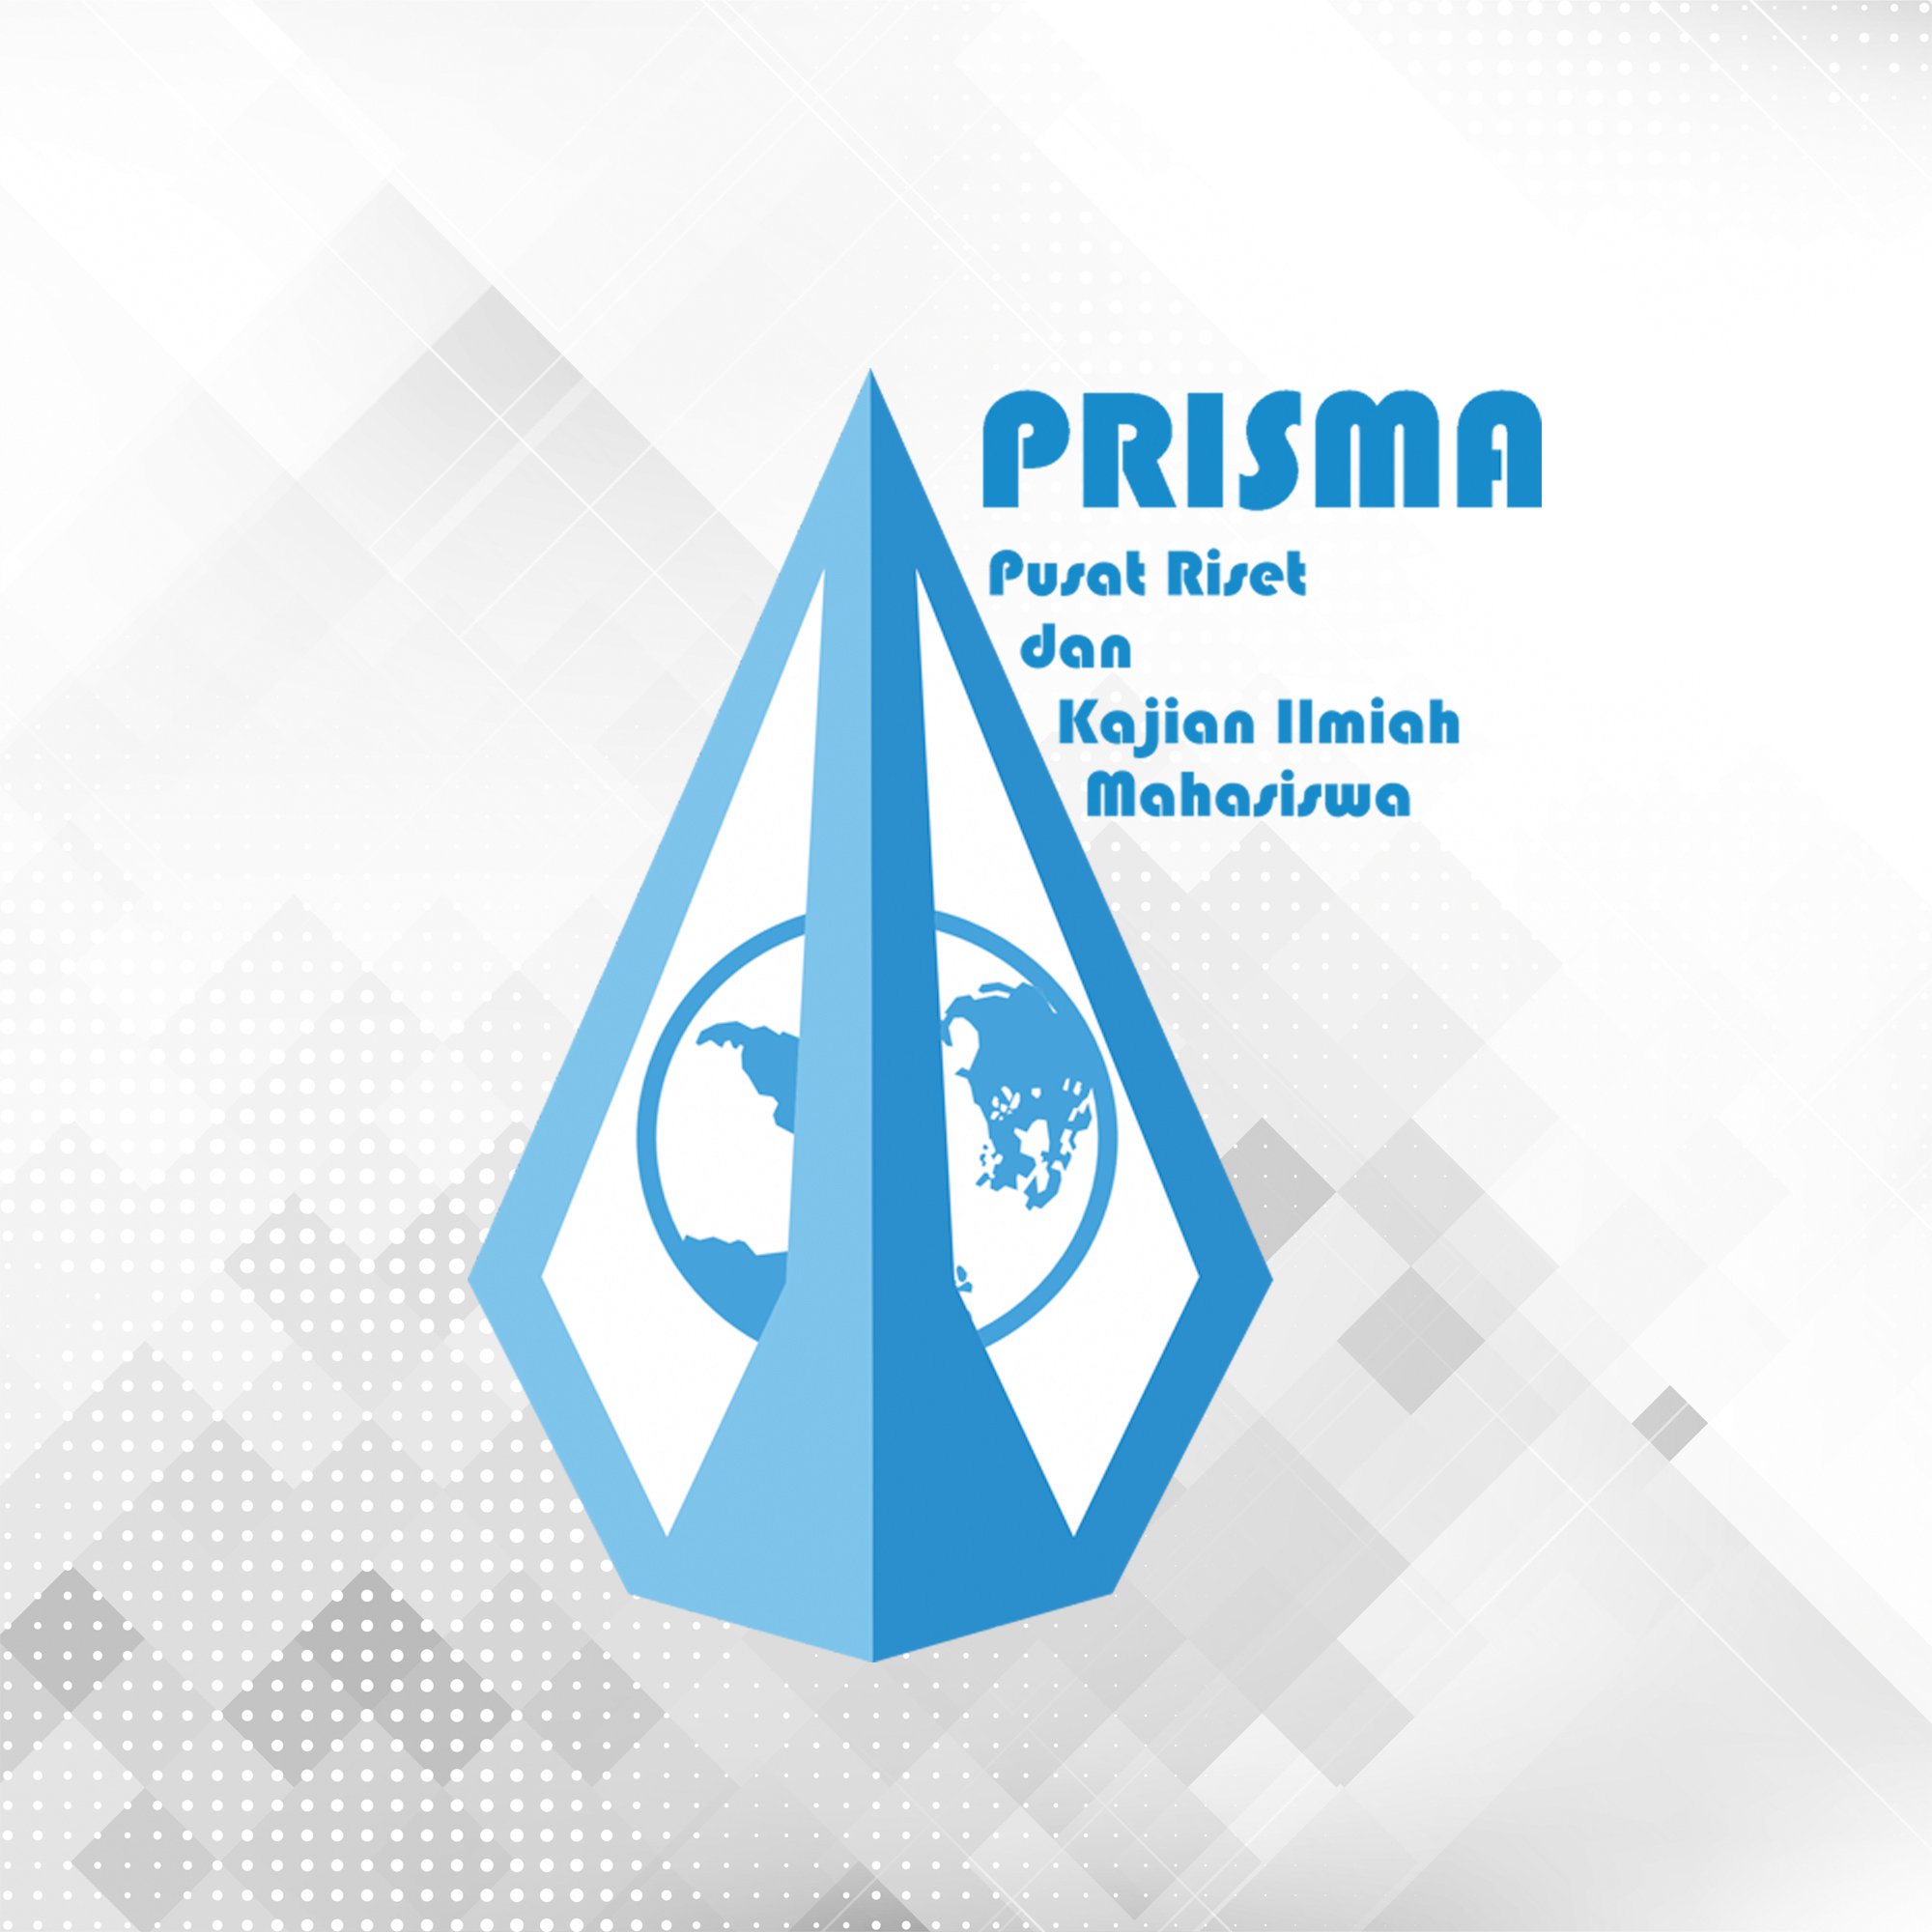 Pusat Riset dan Kajian Ilmiah Mahasiswa FPUB

Instagram : @prisma_fpub
FB : PRISMA FP UB 
Line: @rih9542r
Sekretariat Bersama LKM FP UB lt.2

#PRISMATernyata